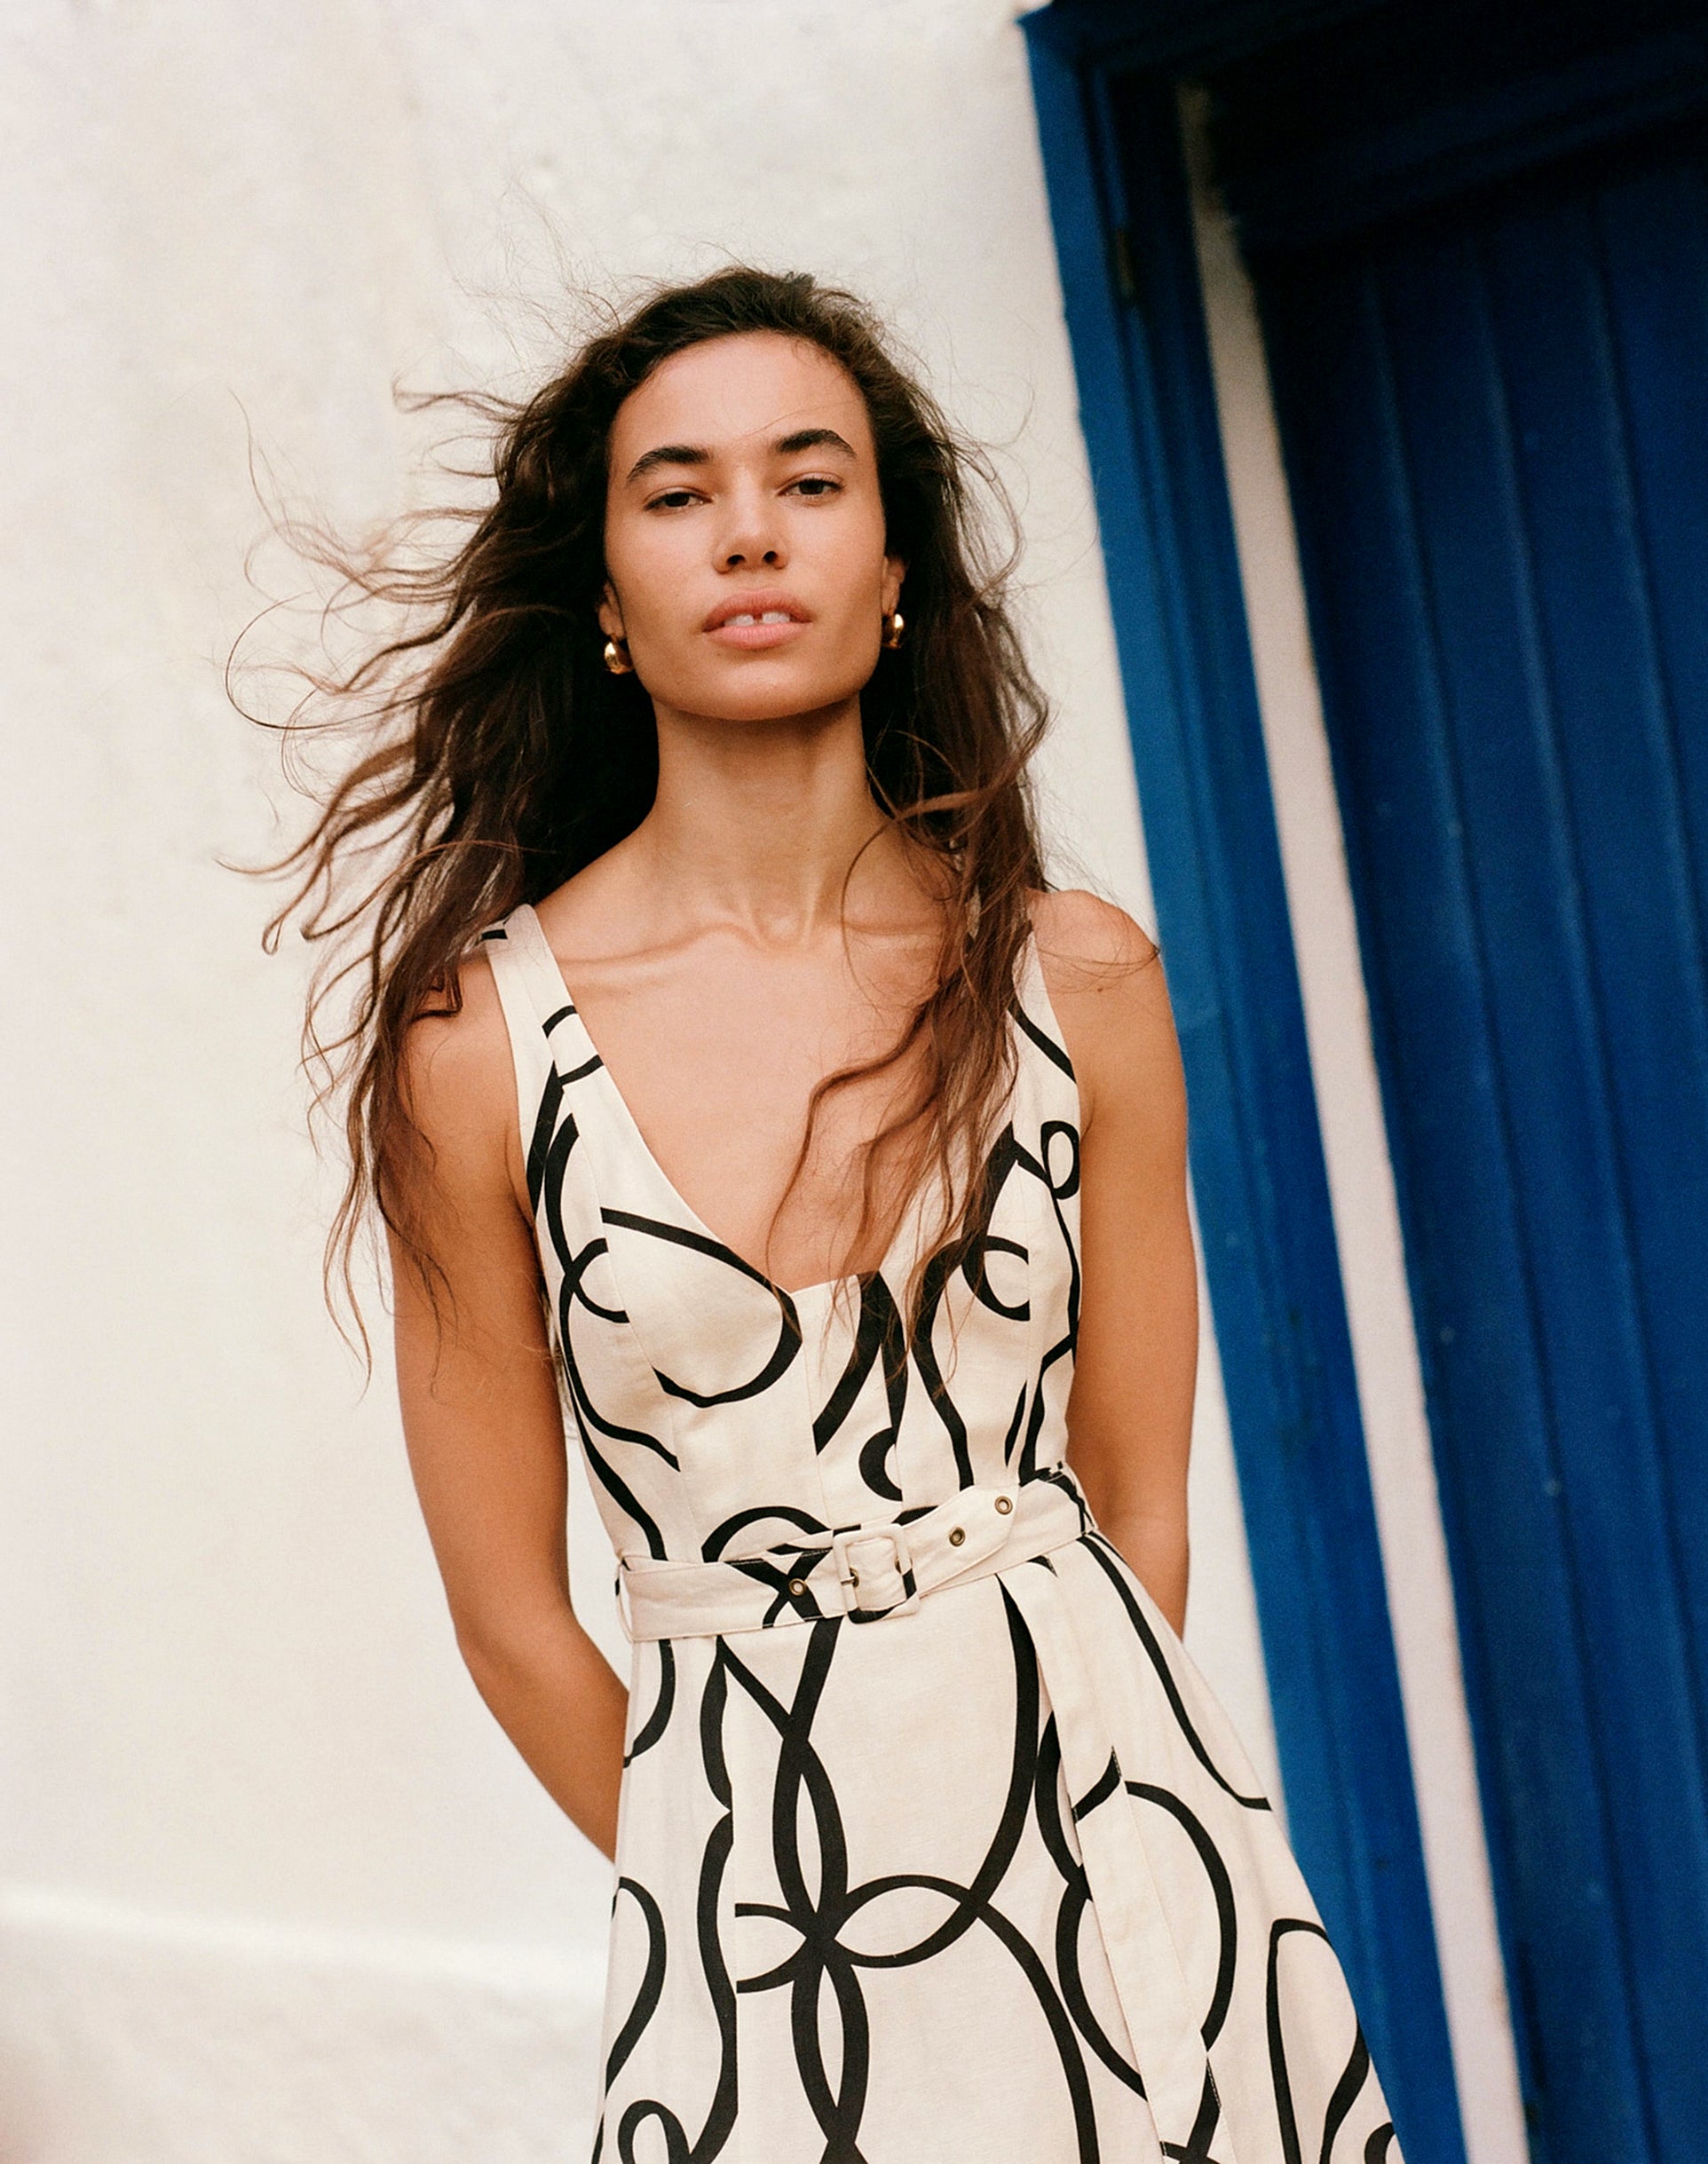 Shona Joy | Vietri Plunged Panelled Midi Dress